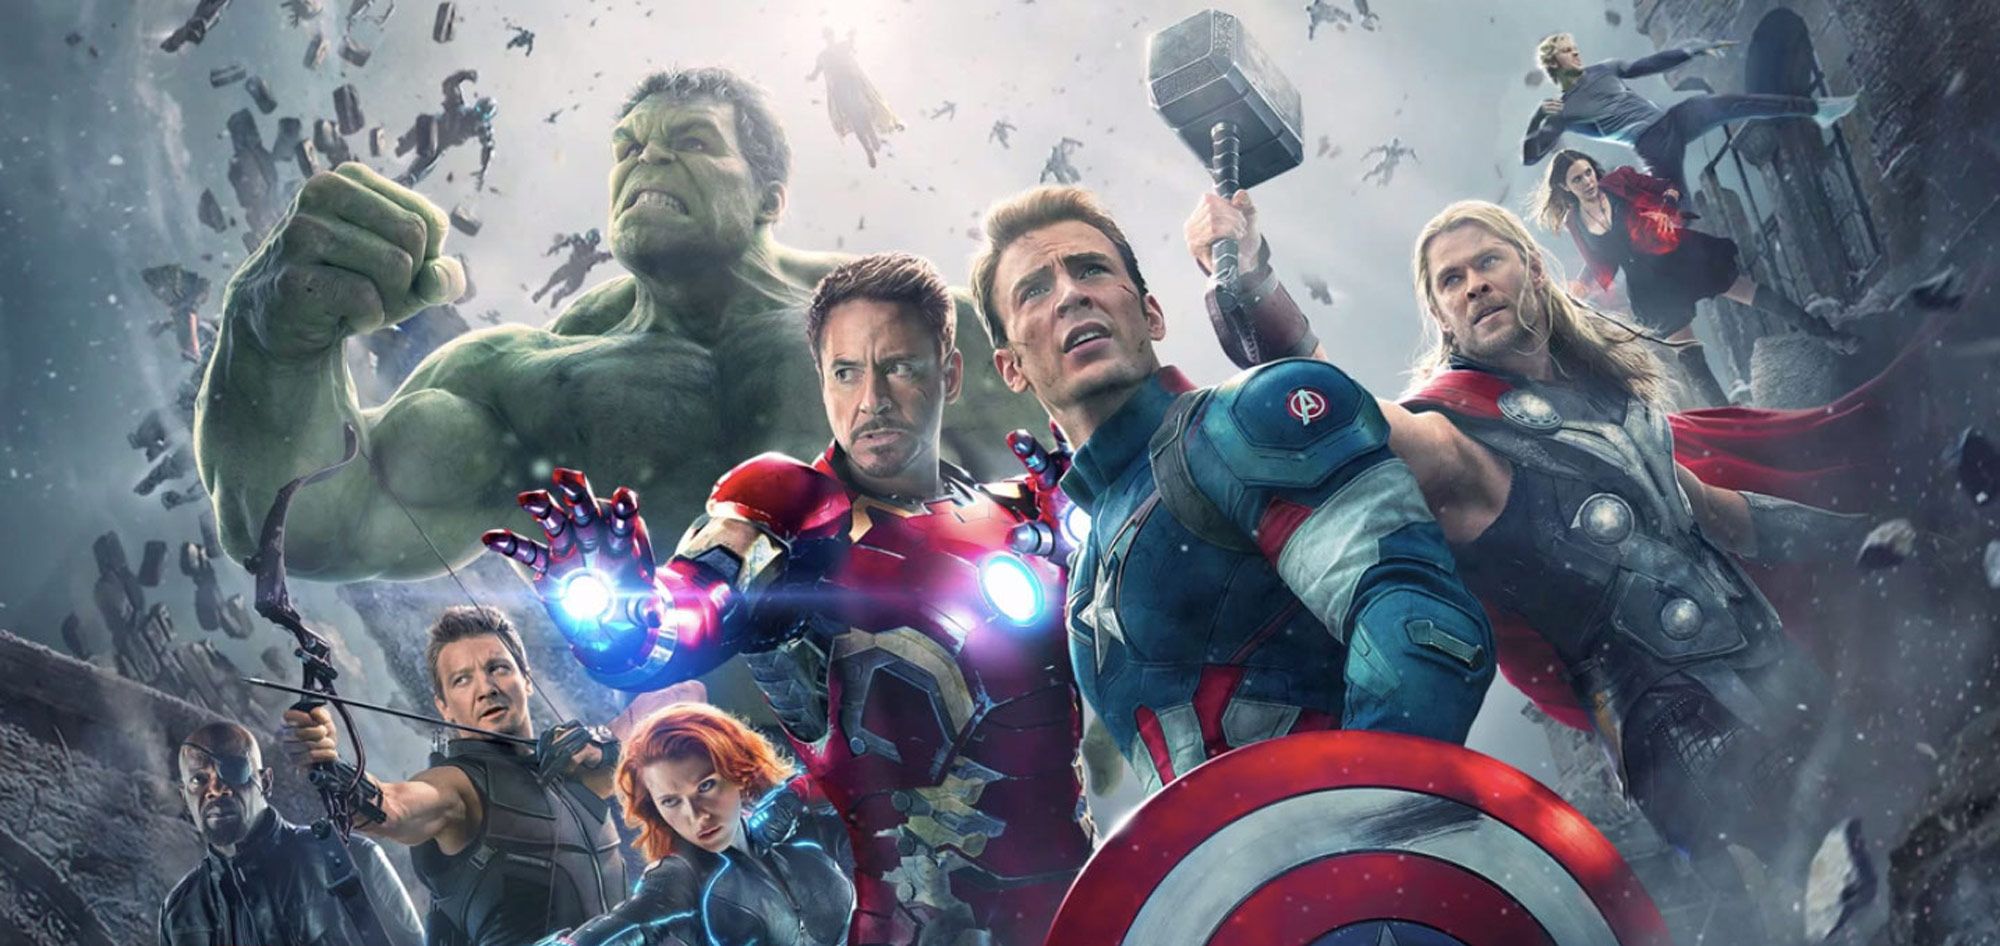 Original 'Avengers' Actors Got Matching Tattoos to Celebrate 'Infinity War'